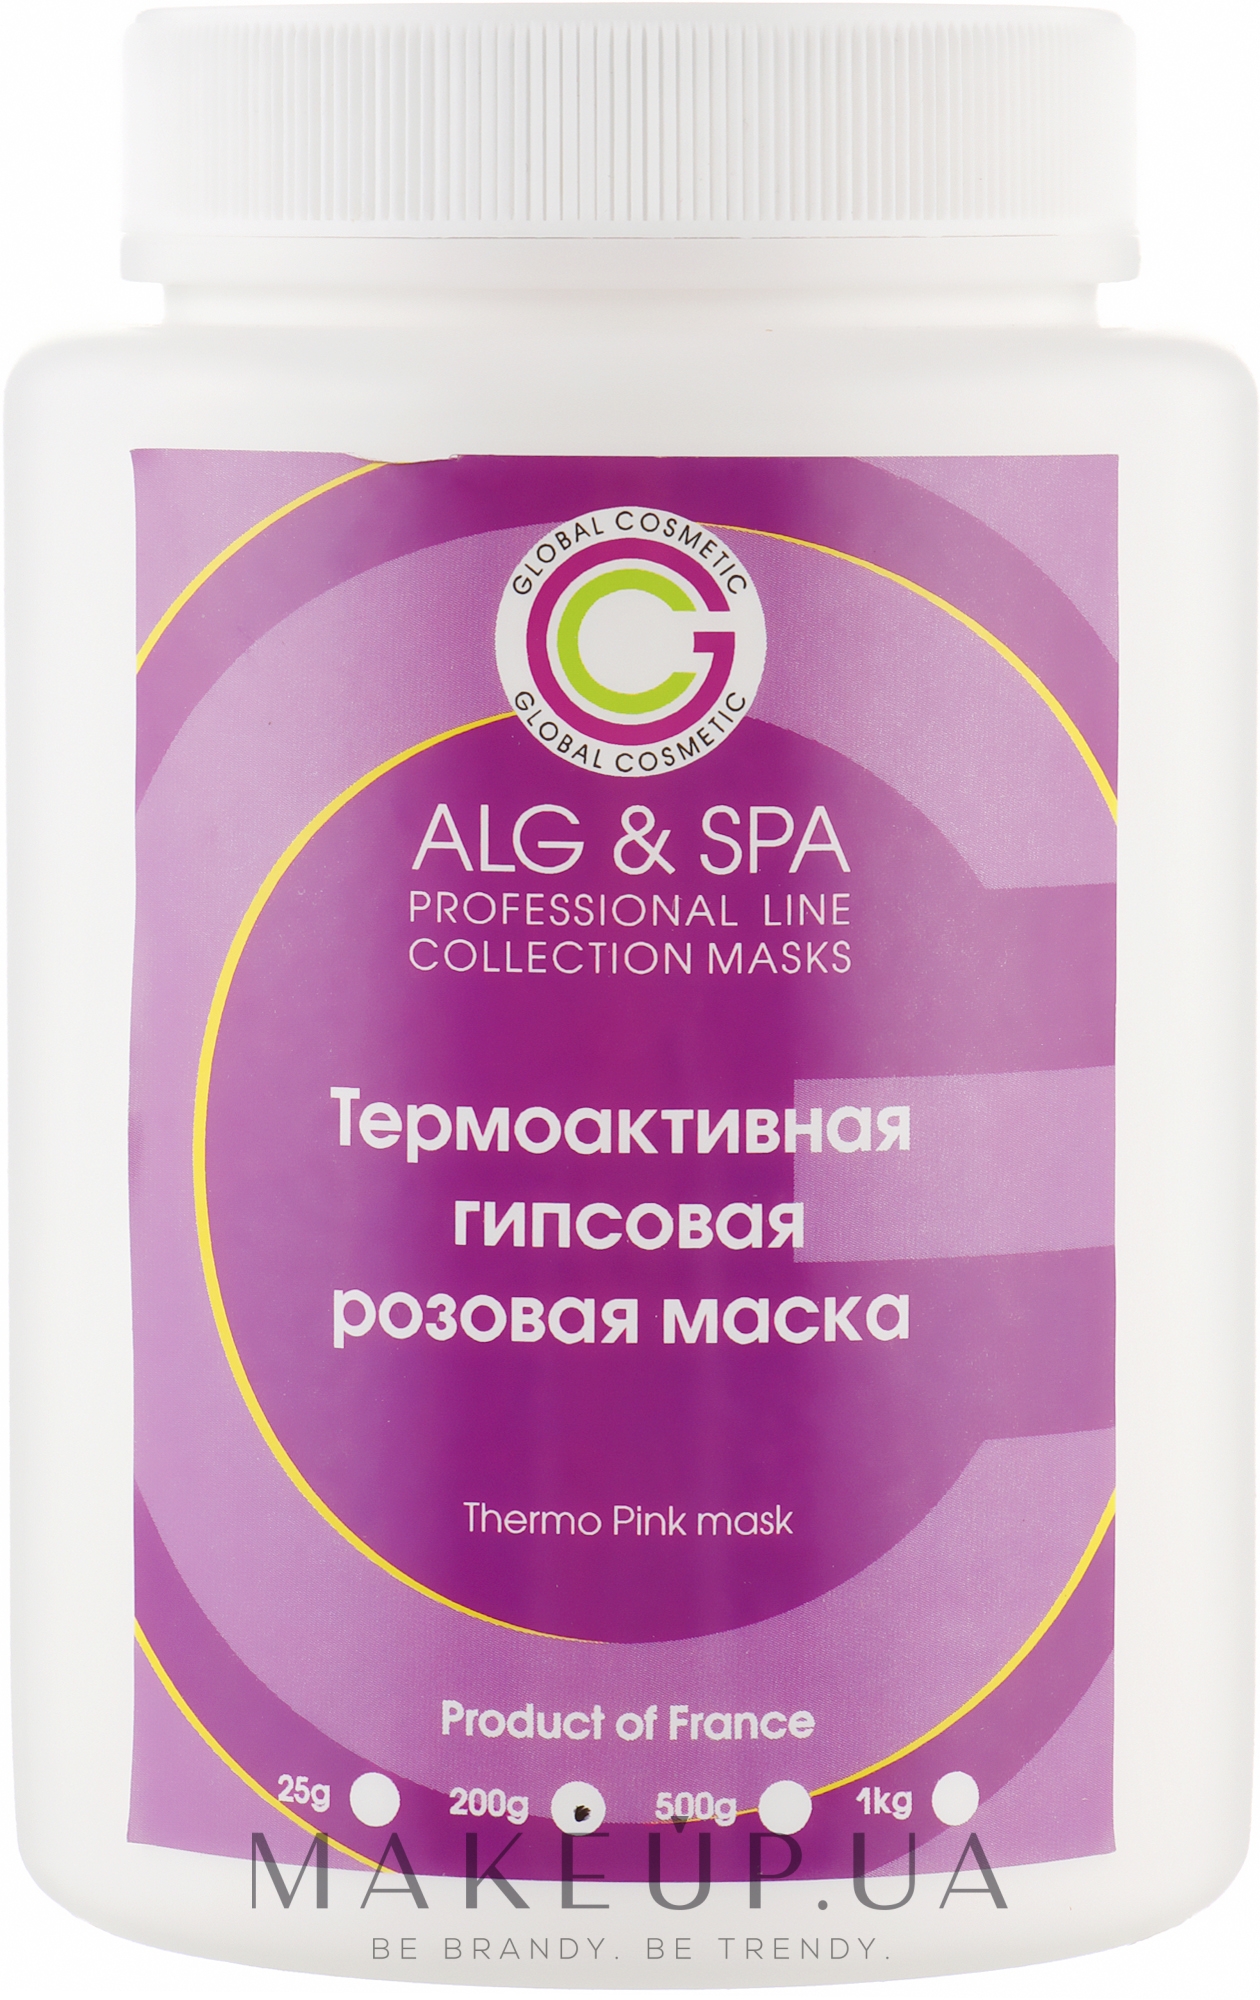 Термомоделююча трояндова маска (гіпсова) - ALG & SPA Professional Line Collection Masks Thermo Pink Mask — фото 200g